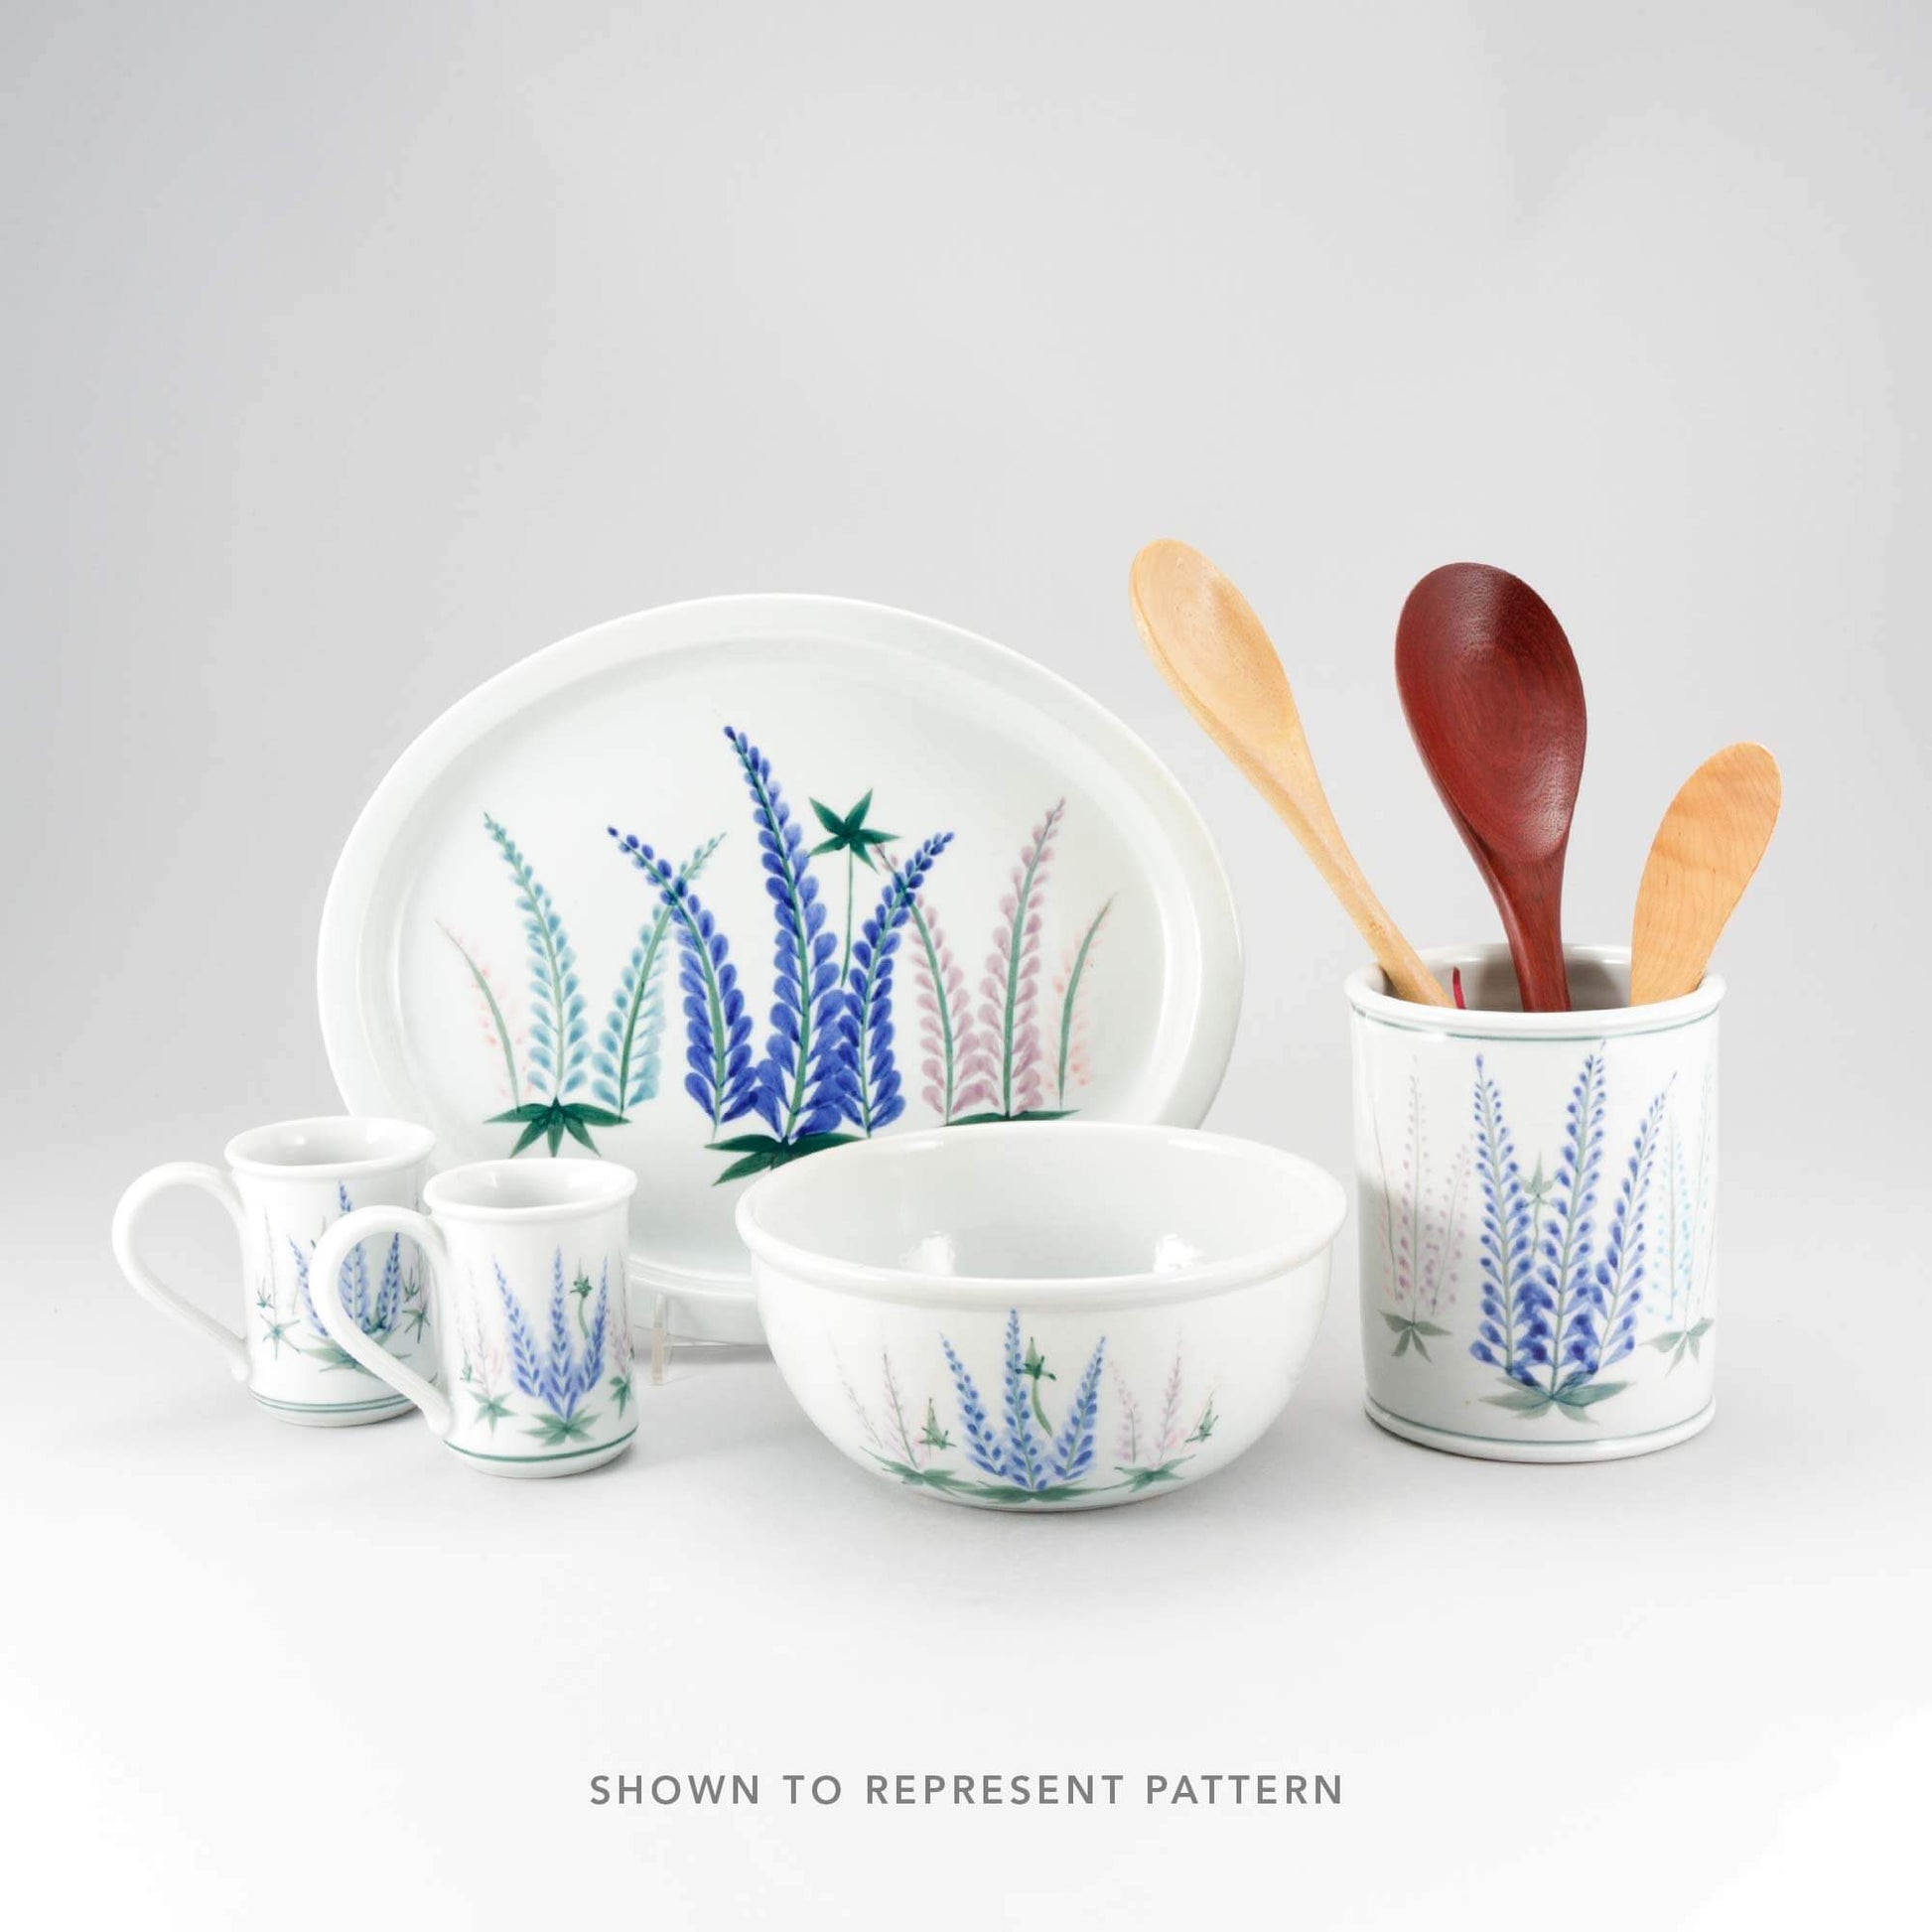 Medium Utensil Holder / Vase, Aqua Mist — Back Bay Pottery